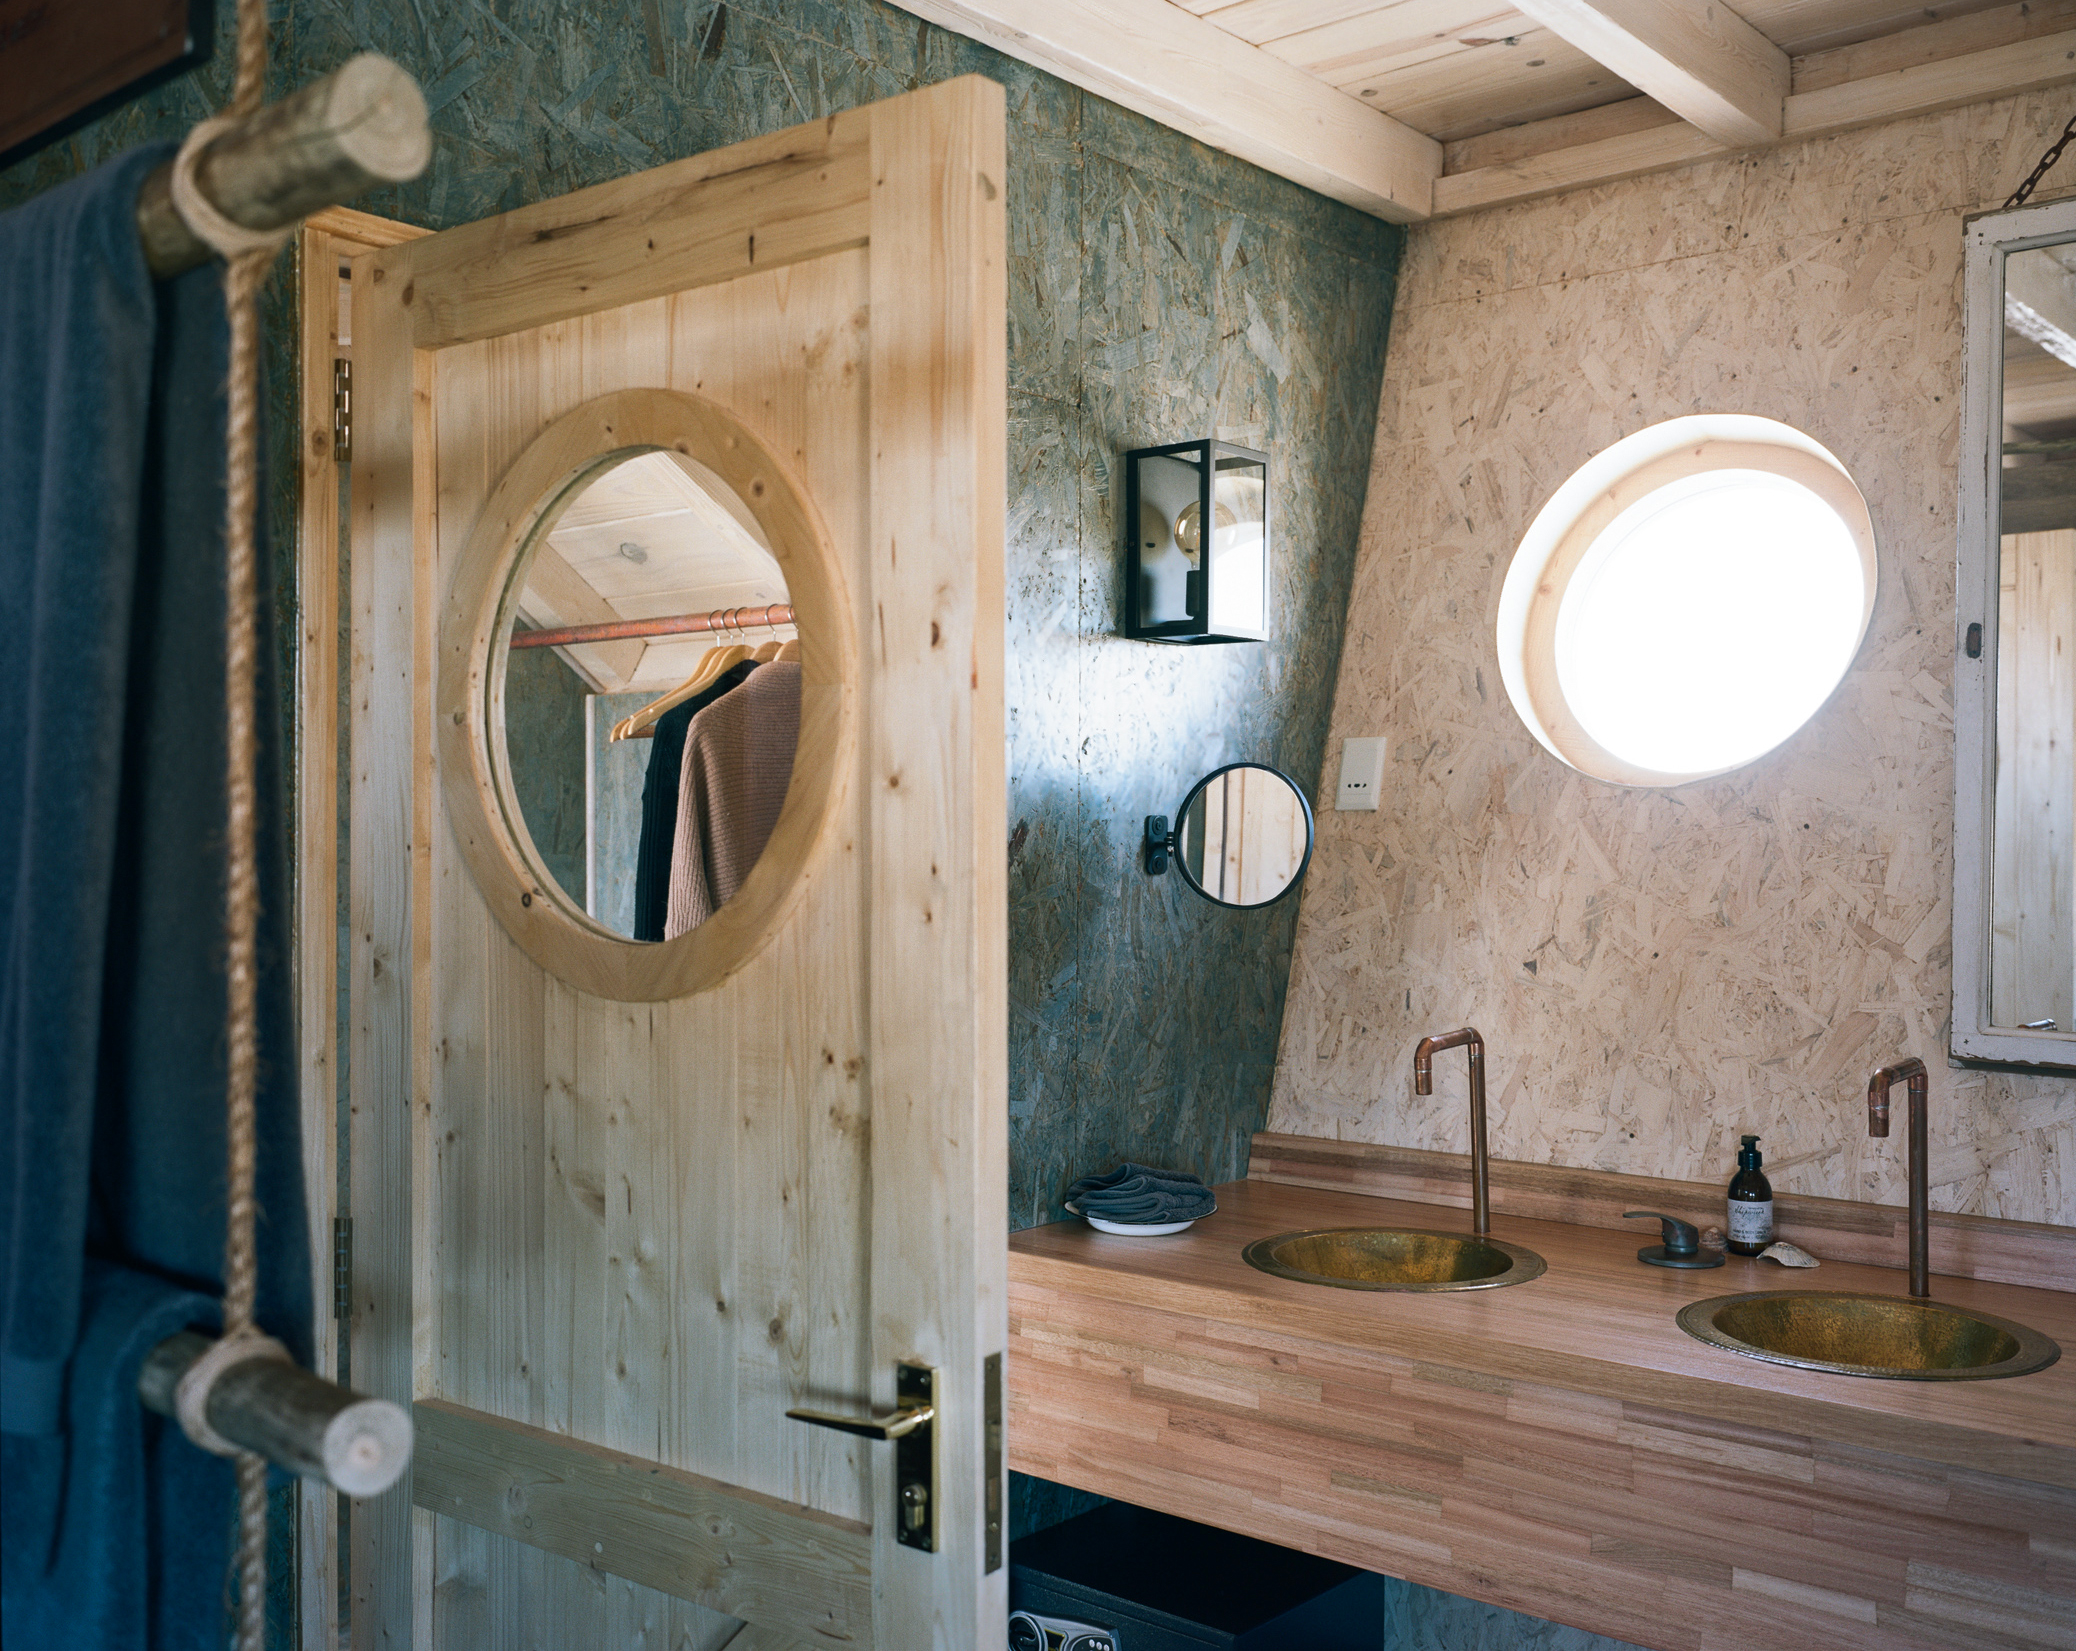 Shipwreck Lodge - Accommodation - Bathroom sinks.jpg